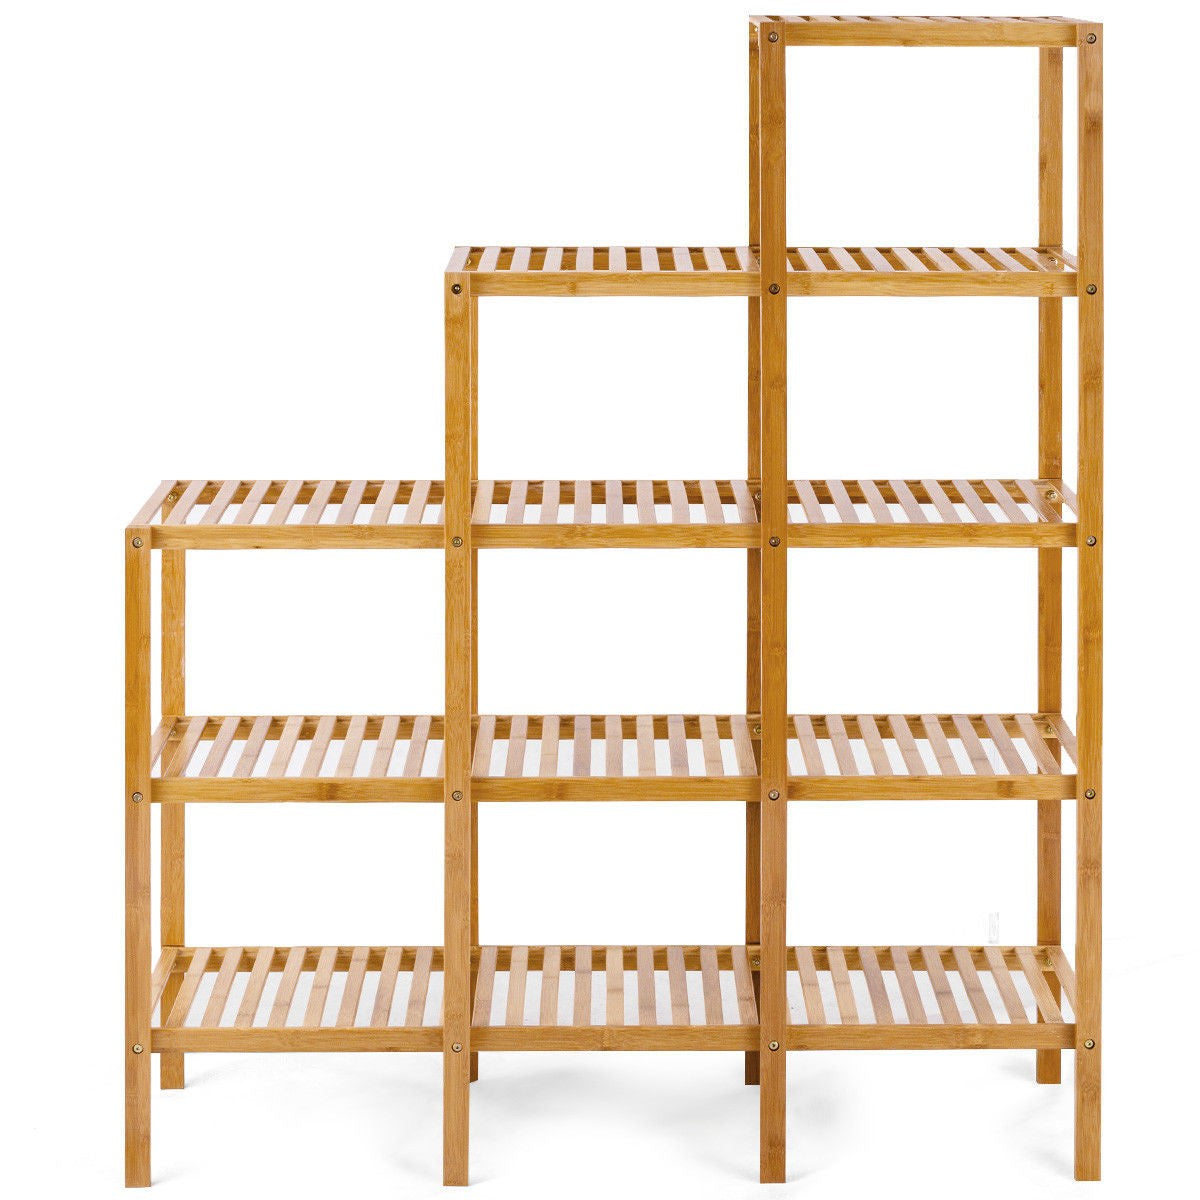 Multifunctional Bamboo Shelf Storage